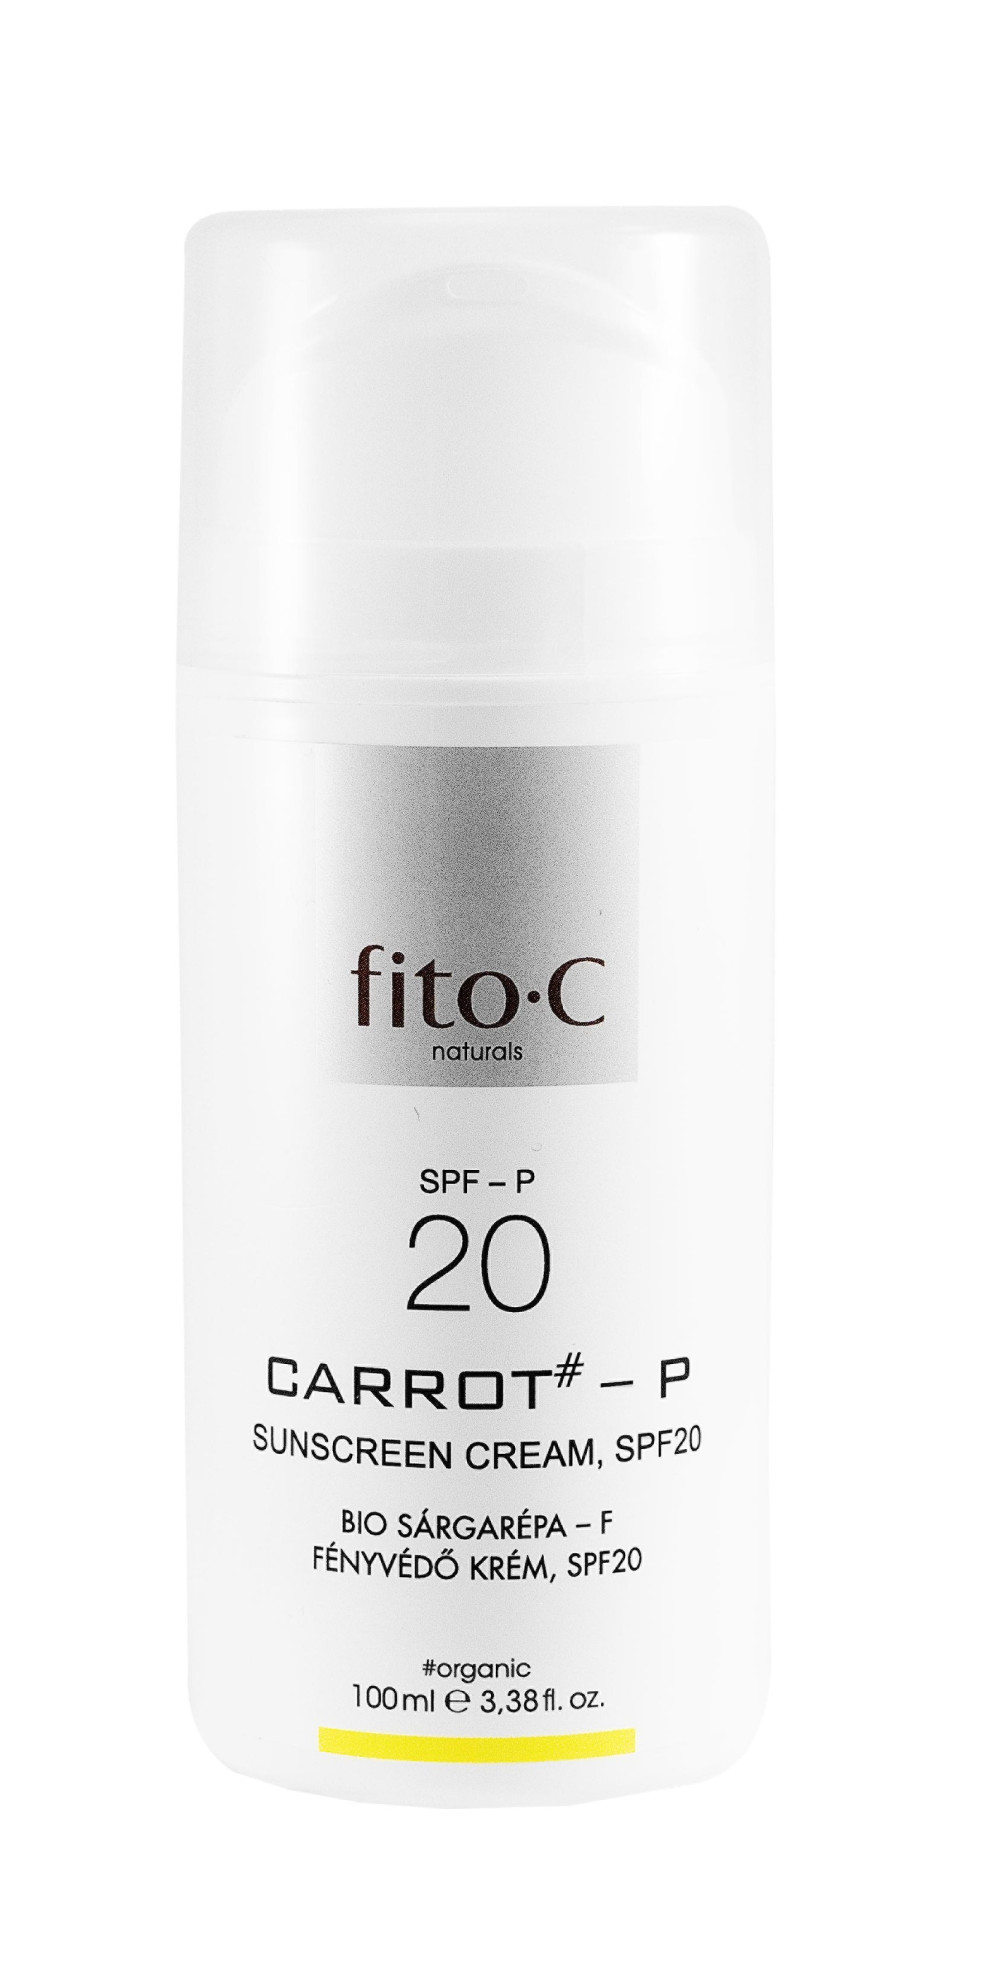 fito.C - Carrot - P Sunscreen Cream, SPF20 - Bio Sárgarépa - F Fényvédő Krém, SPF20, 100ml - fizikai fényszűrőkkel